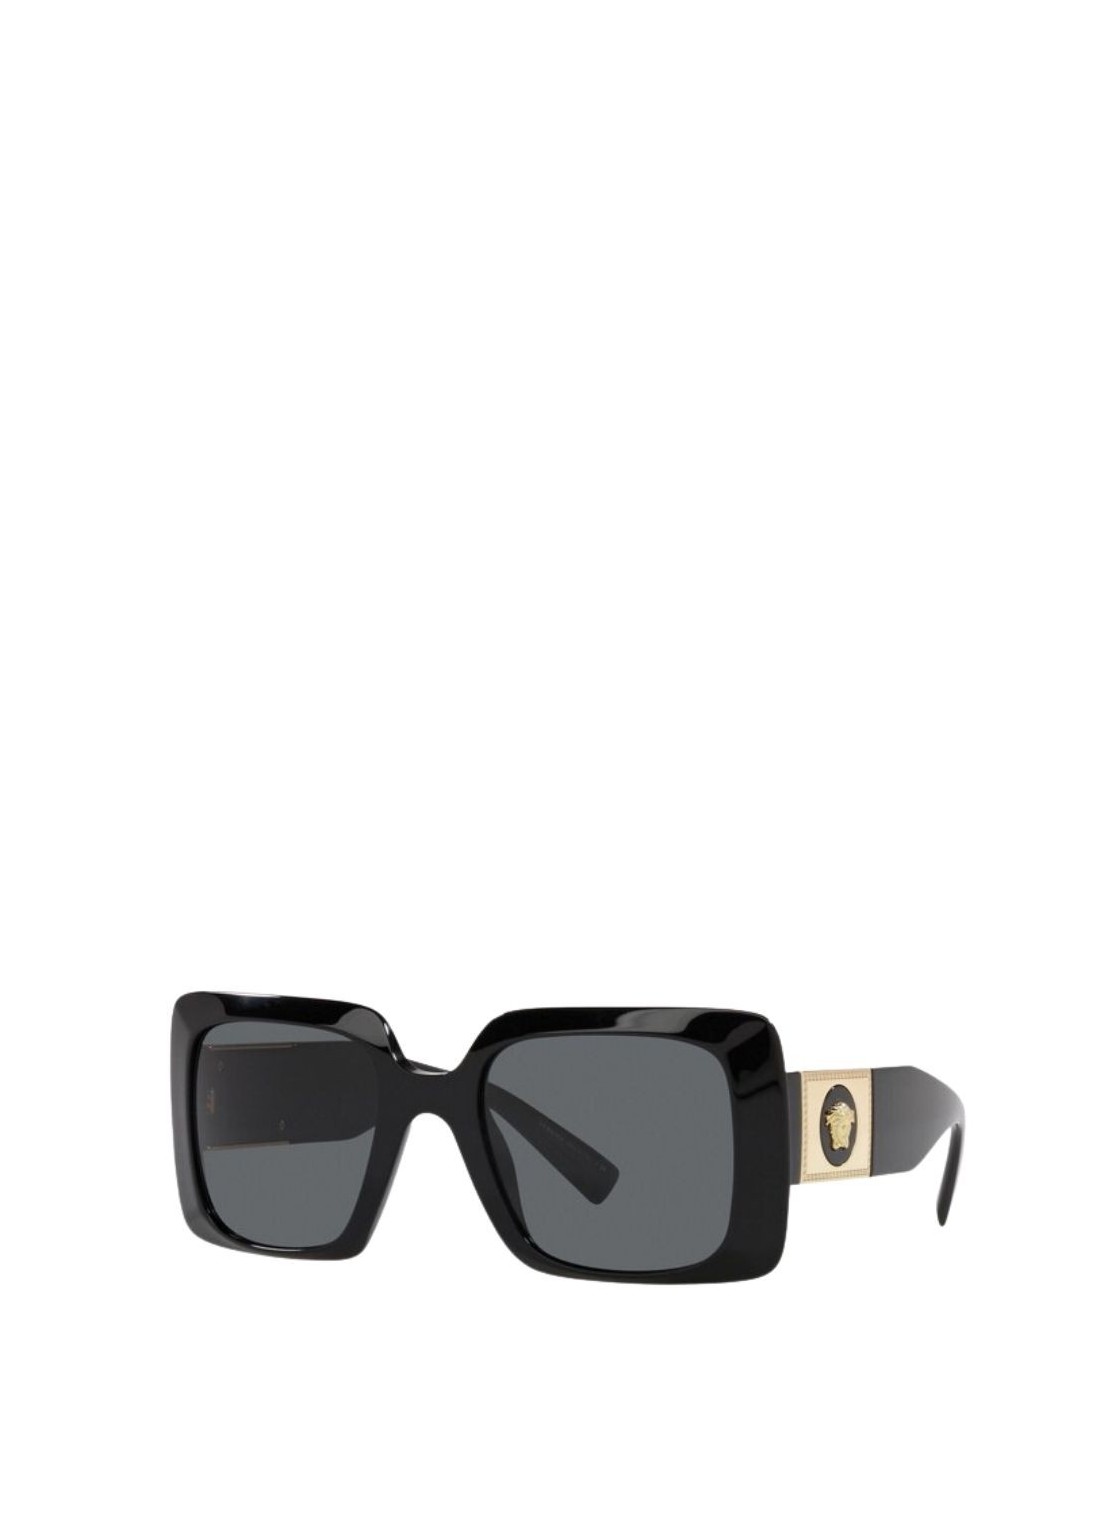 Gafas versace sunglasses woman 0ve4405 0ve4405 gb1 87 talla 54
 